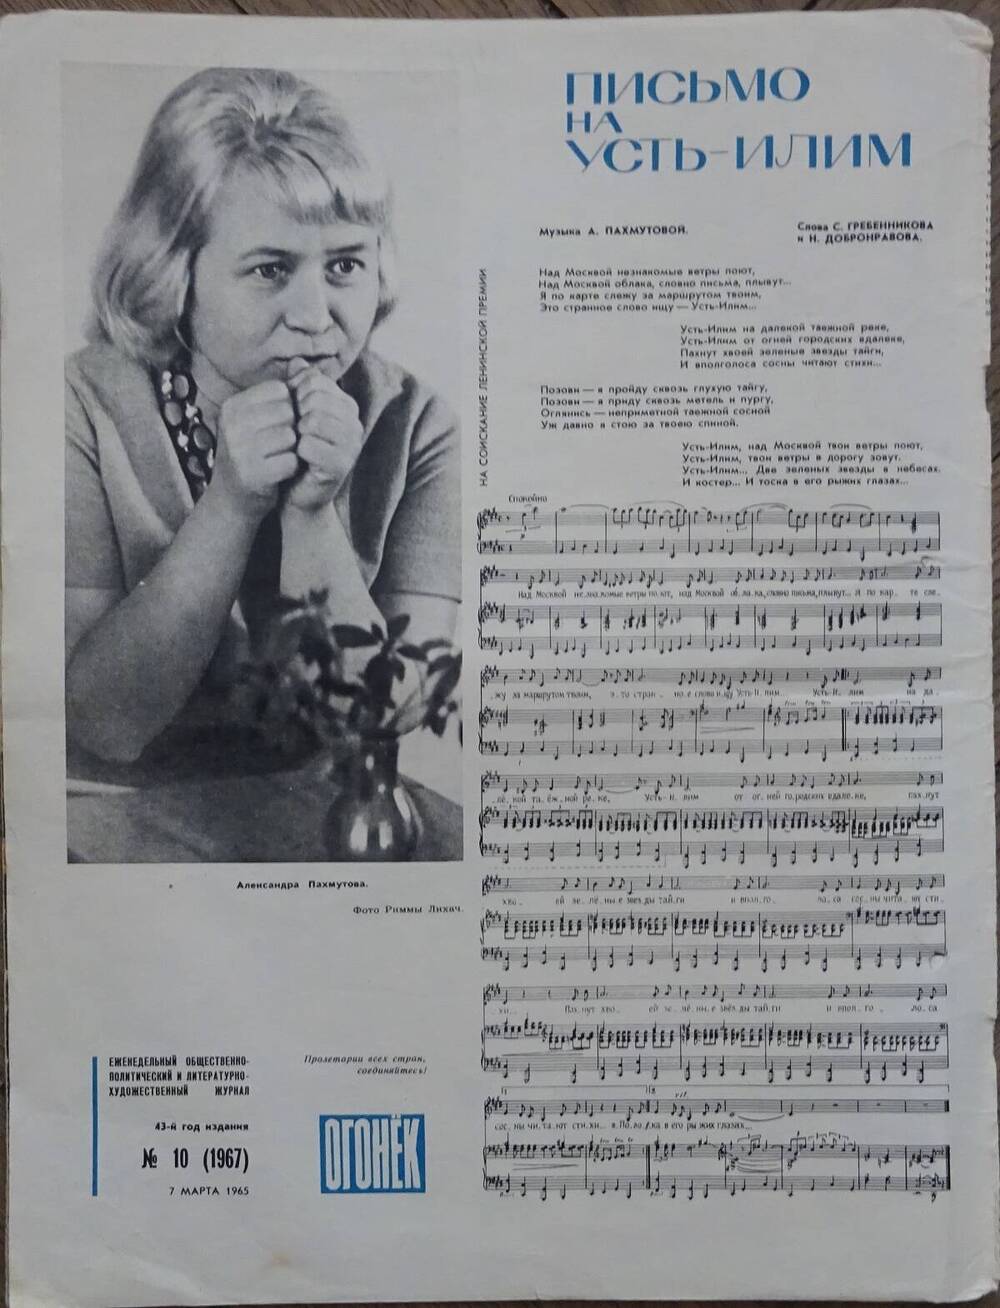 Журнал «Огонек» № 10. СССР, Москва, изд-во «Правда», март 1965 г.